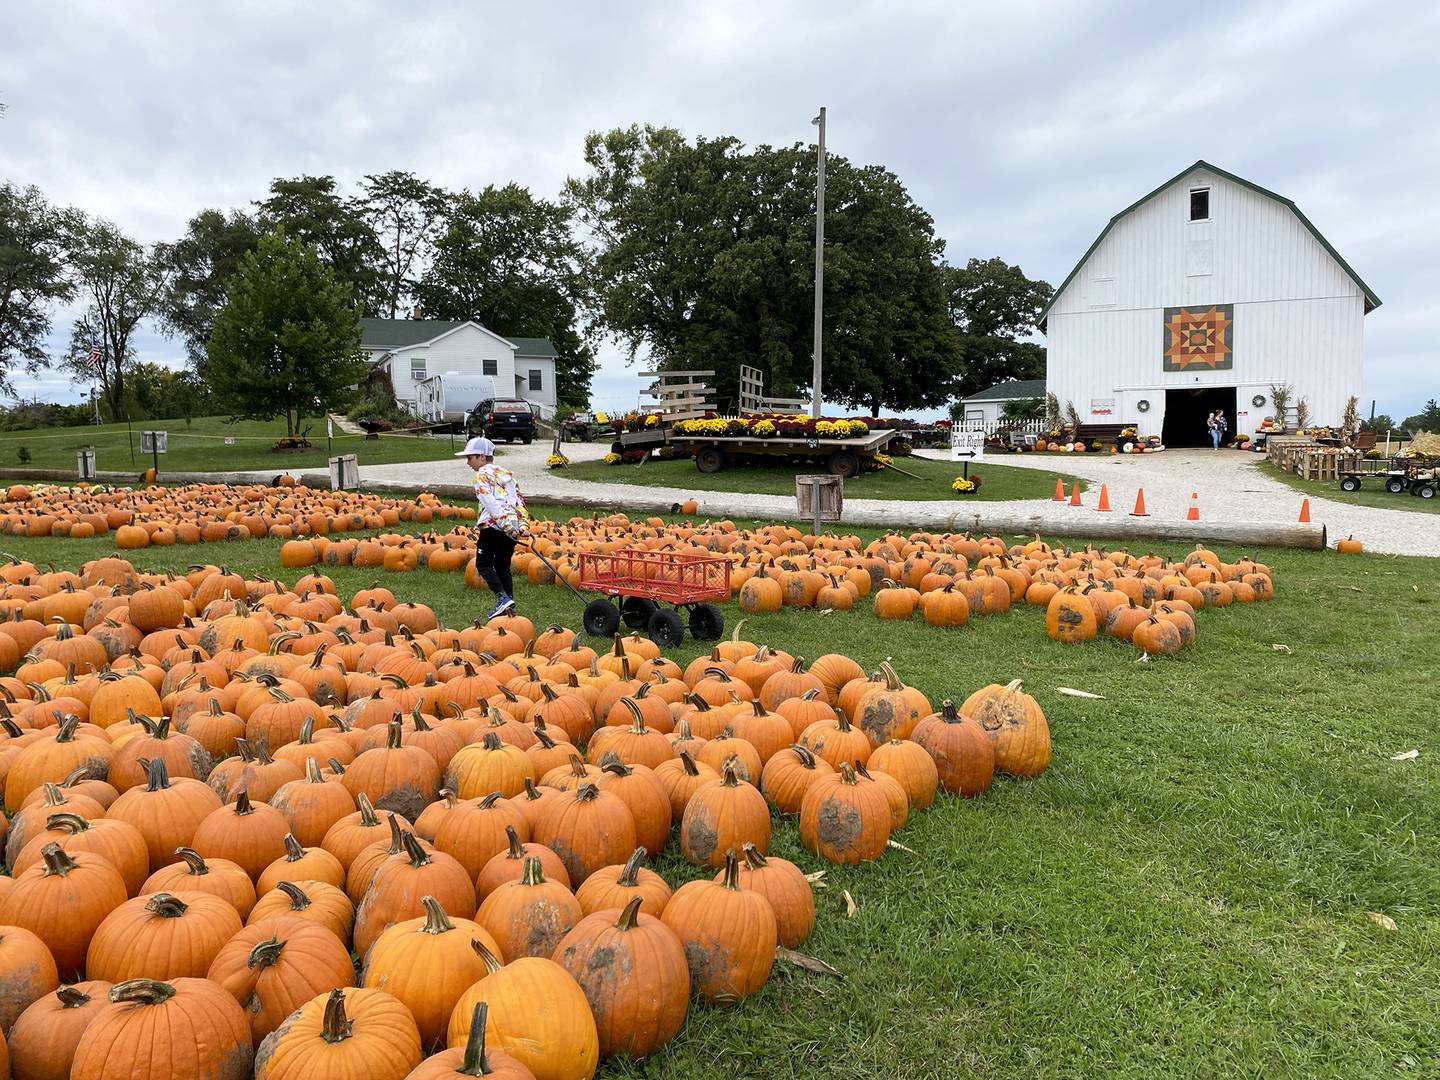 All pumpkins sold at Sugar Grove Pumpkin Farm, 4S041 Merrill Road, are grown on site.